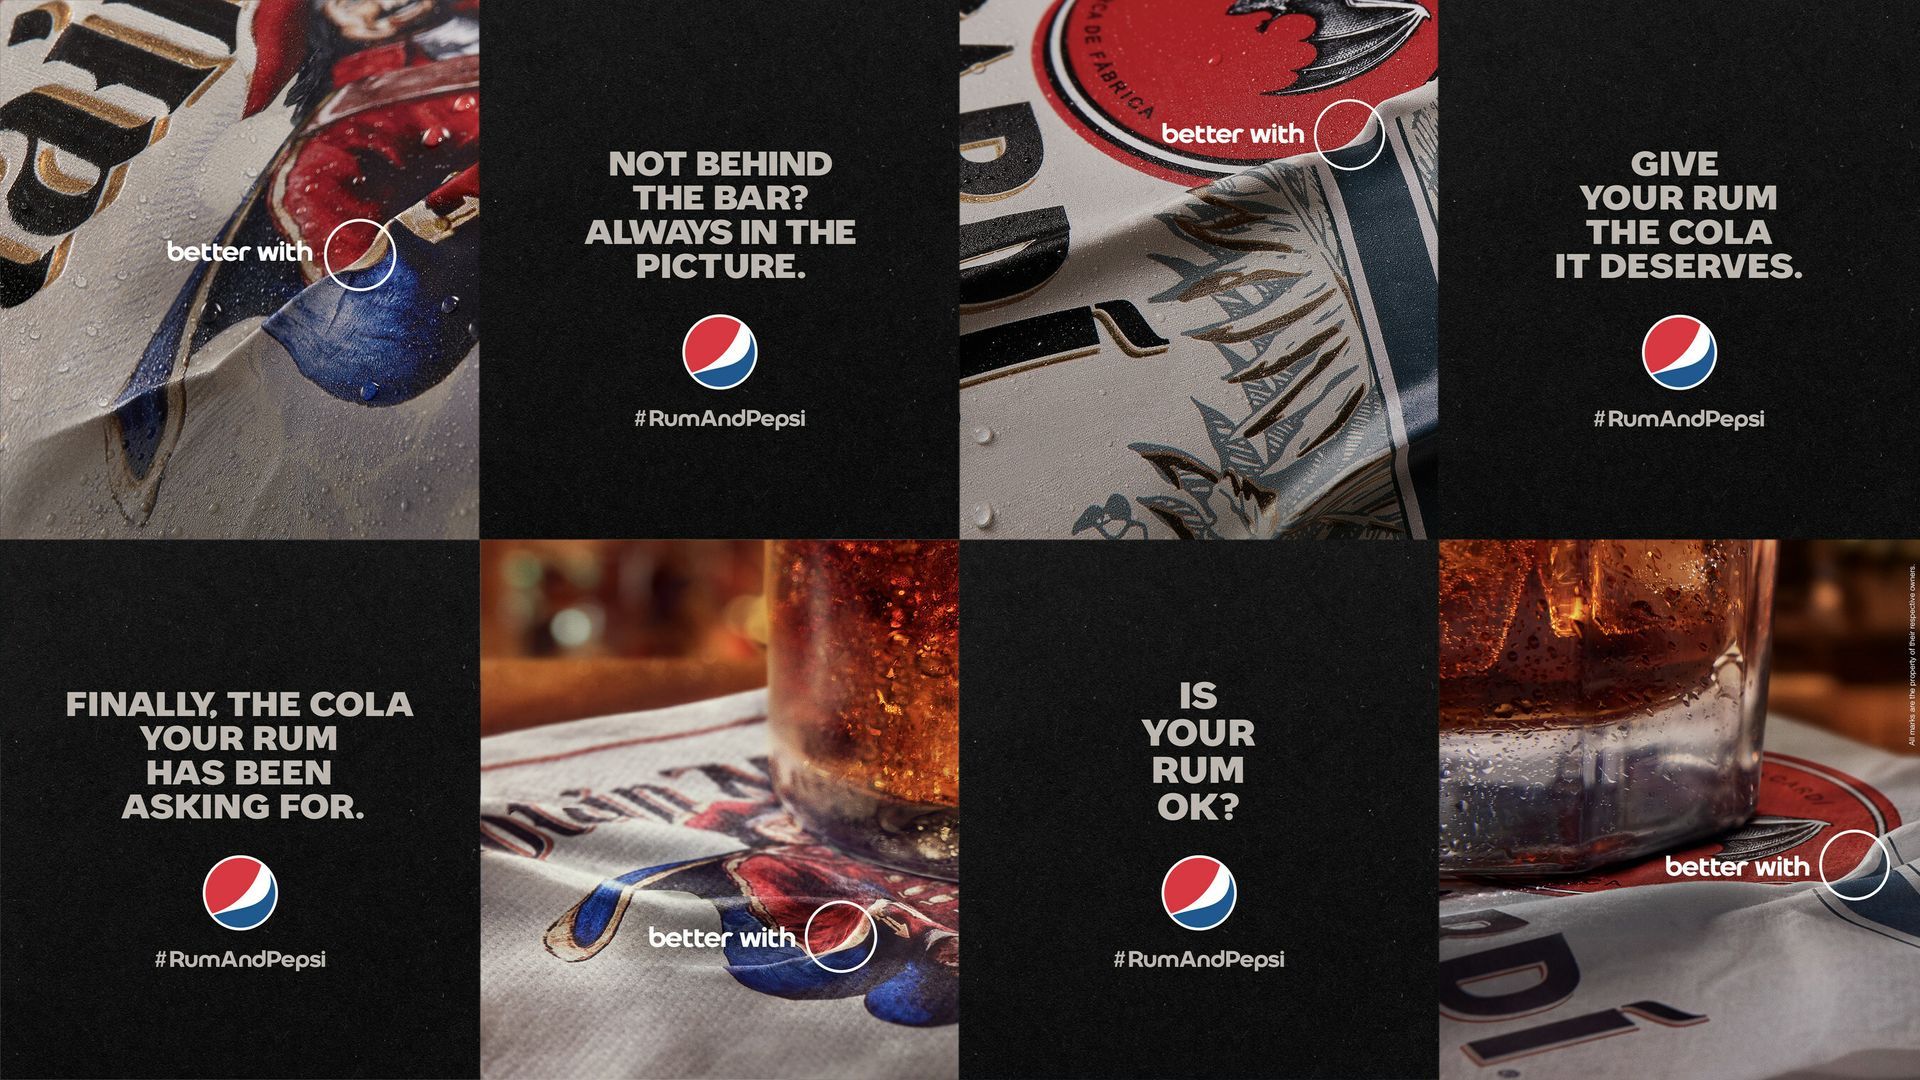 Pepsi_2023_Rum-and-Pepsi_Pepsi-Proves-That-One-of-the-Most-Popular-Bar-Calls-Has-Gotten-It-Wrong_as-Rum-Goes-Better-With+Pepsi_napkin-pepsi-logo_Bacardi_Captain-Morgan_Cola-Zero.com